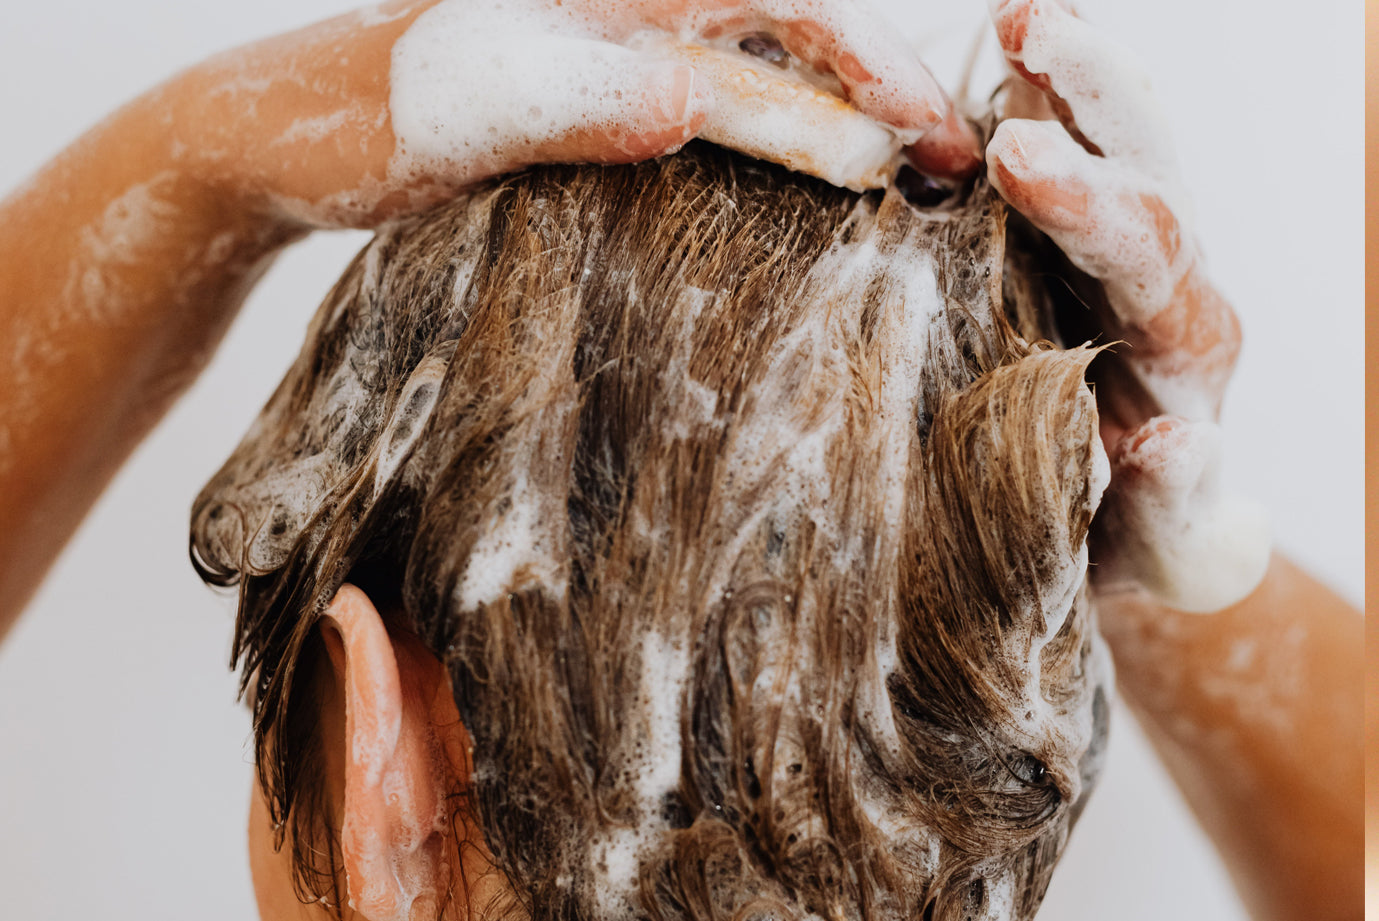 Shampoo pH and the impact on hair health